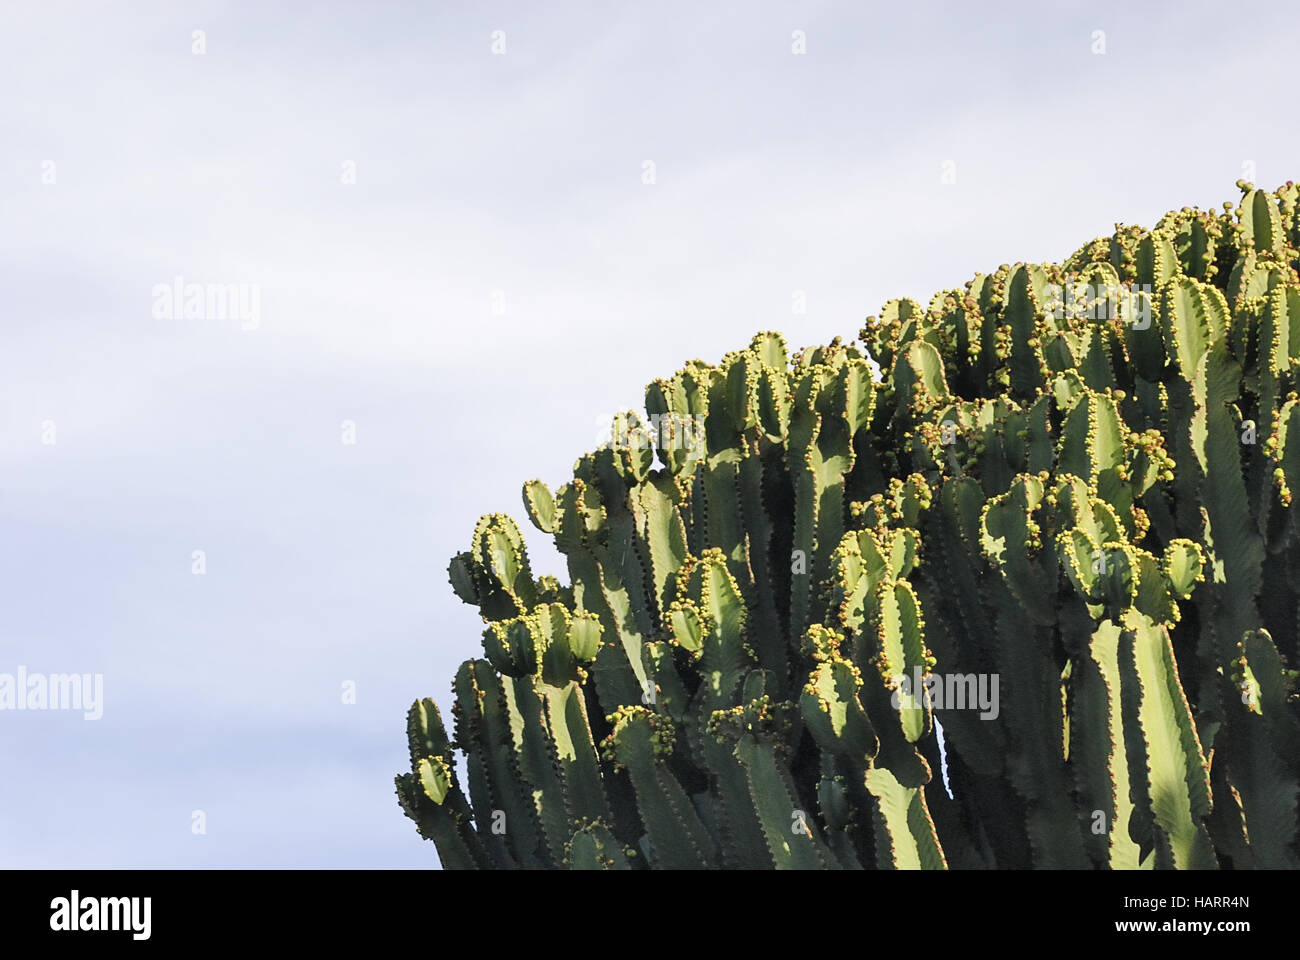 Kakteenwald 9 - Foresta di cactus 9 Foto Stock